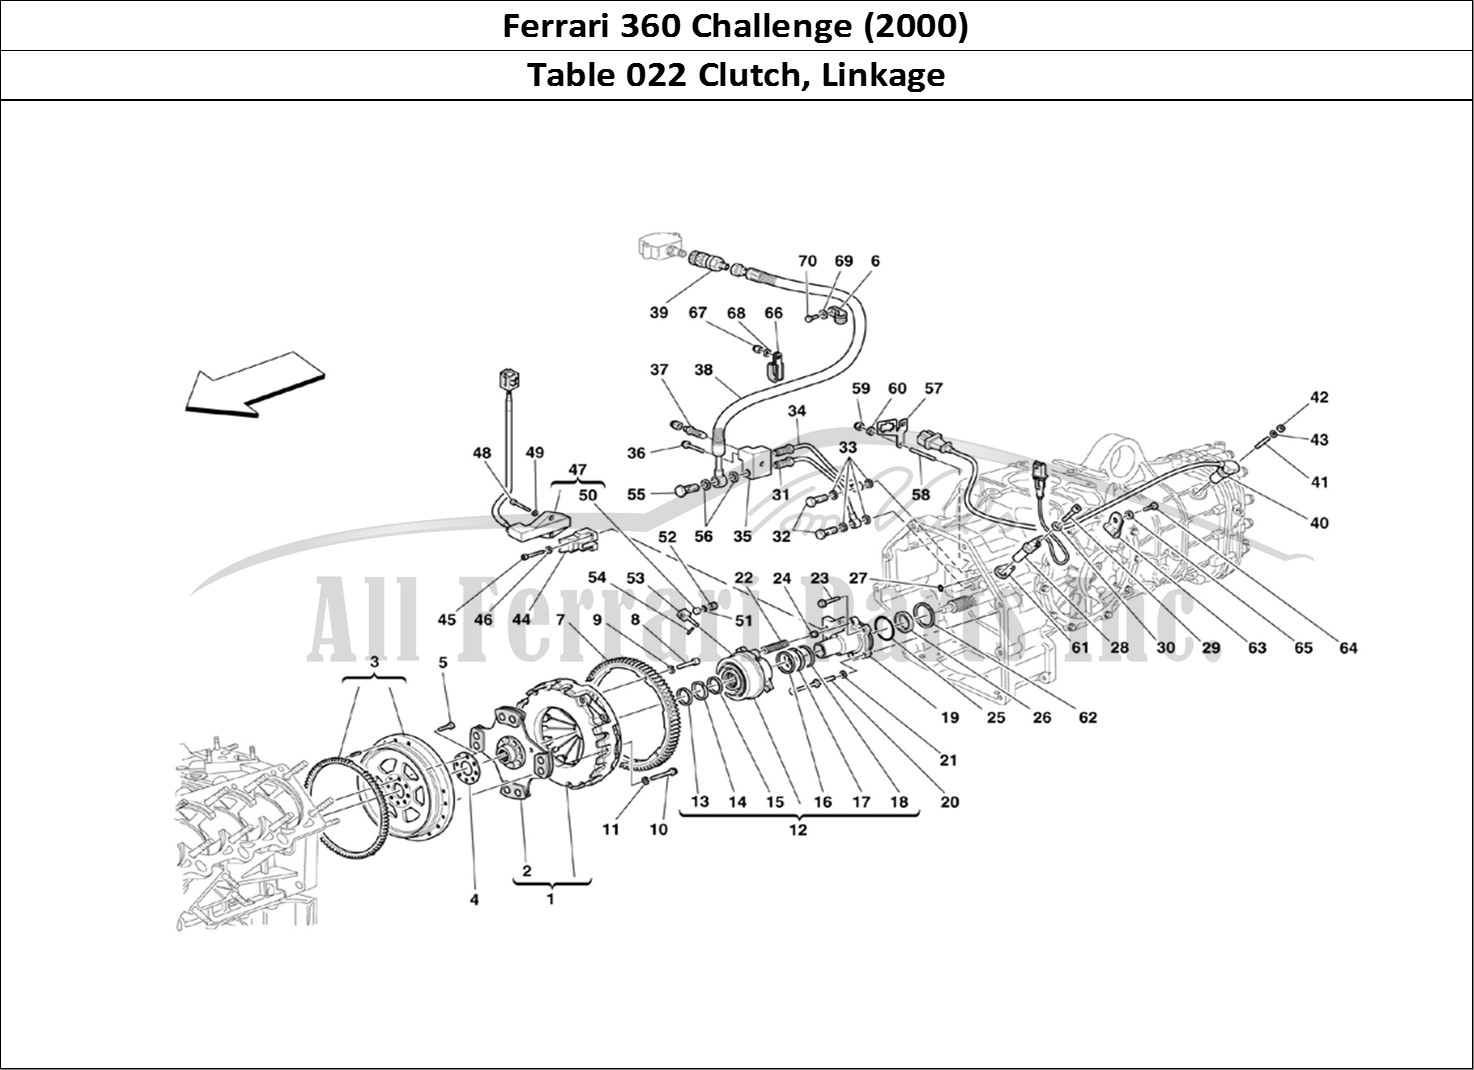 Ferrari Parts Ferrari 360 Challenge (2000) Page 022 Clutch and Controls